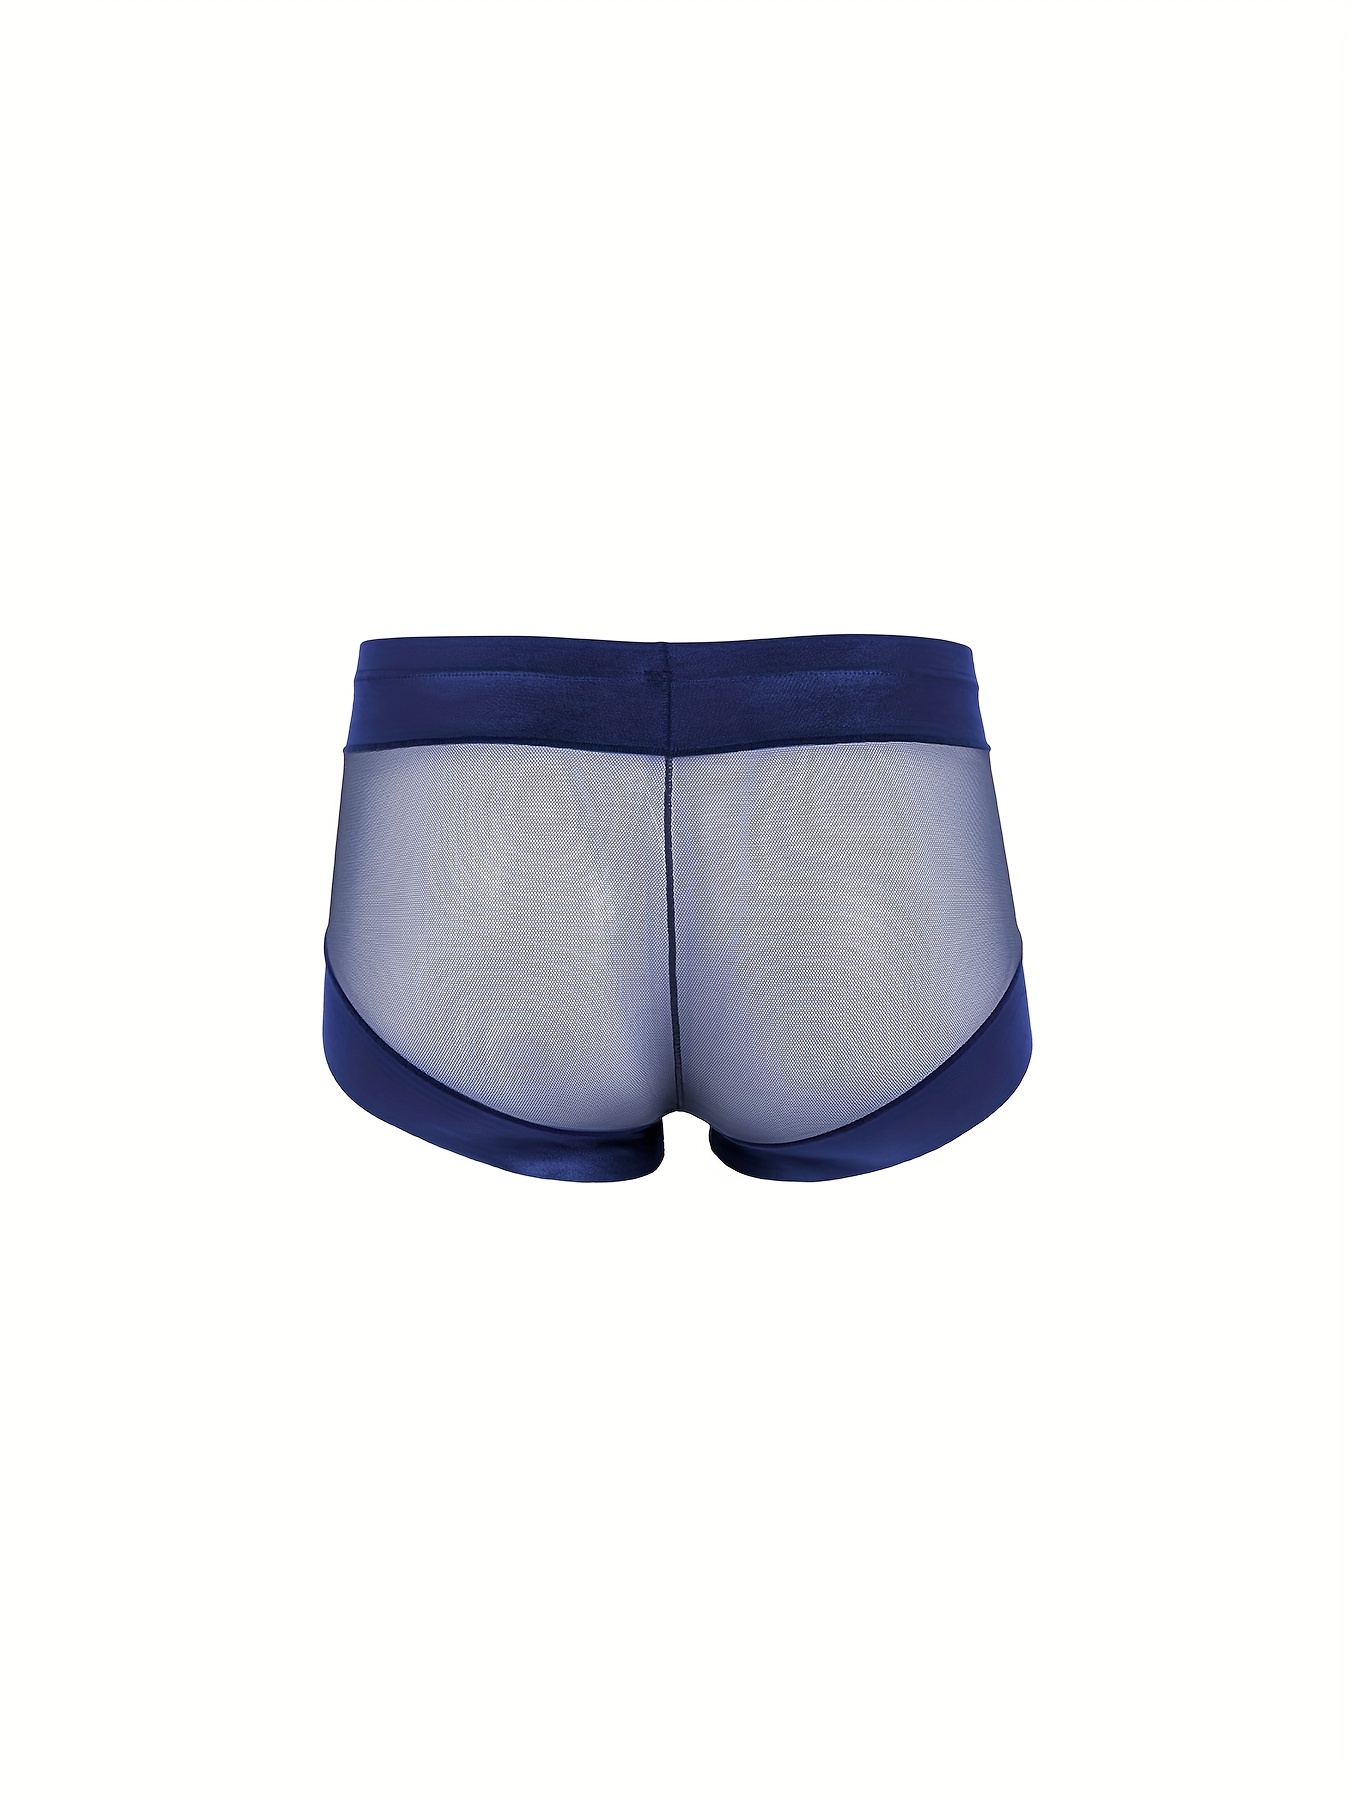 MomLove Men's Sexy Underwear Mesh Transparent Boxer Briefs Low-waisted  Underpants Briefs